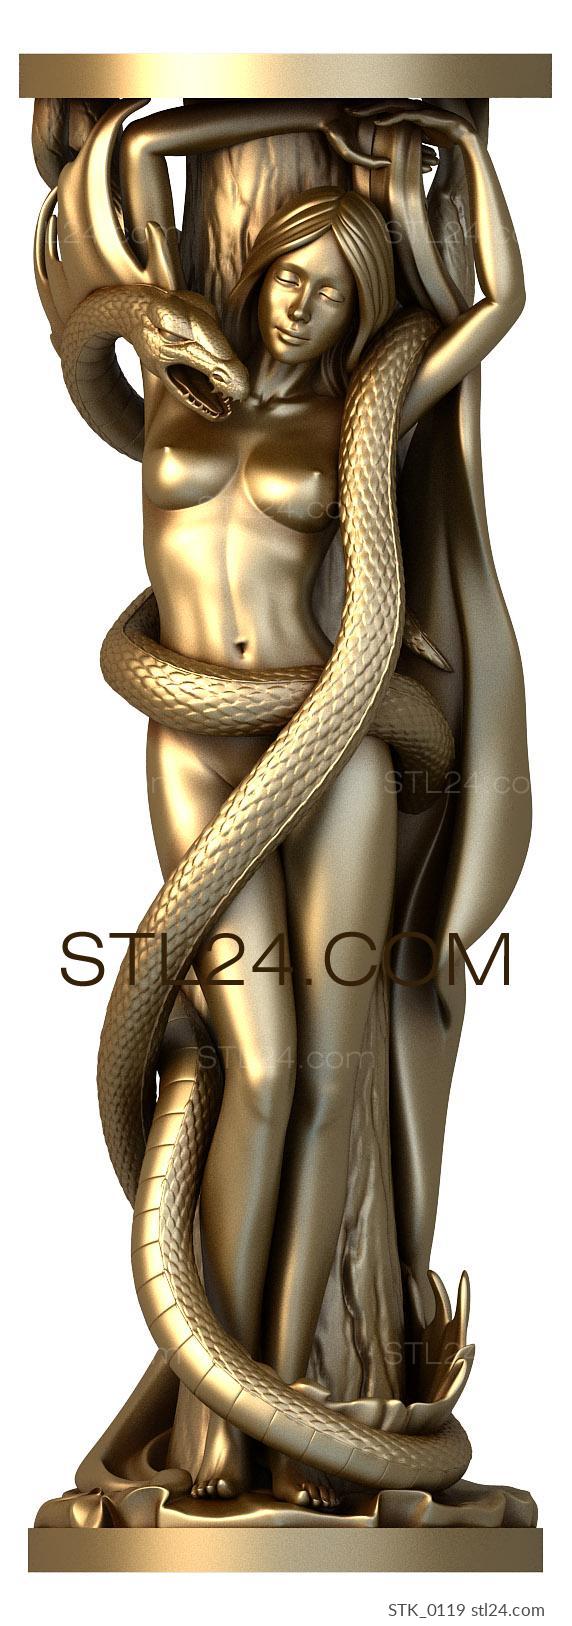 Statuette (STK_0119) 3D models for cnc